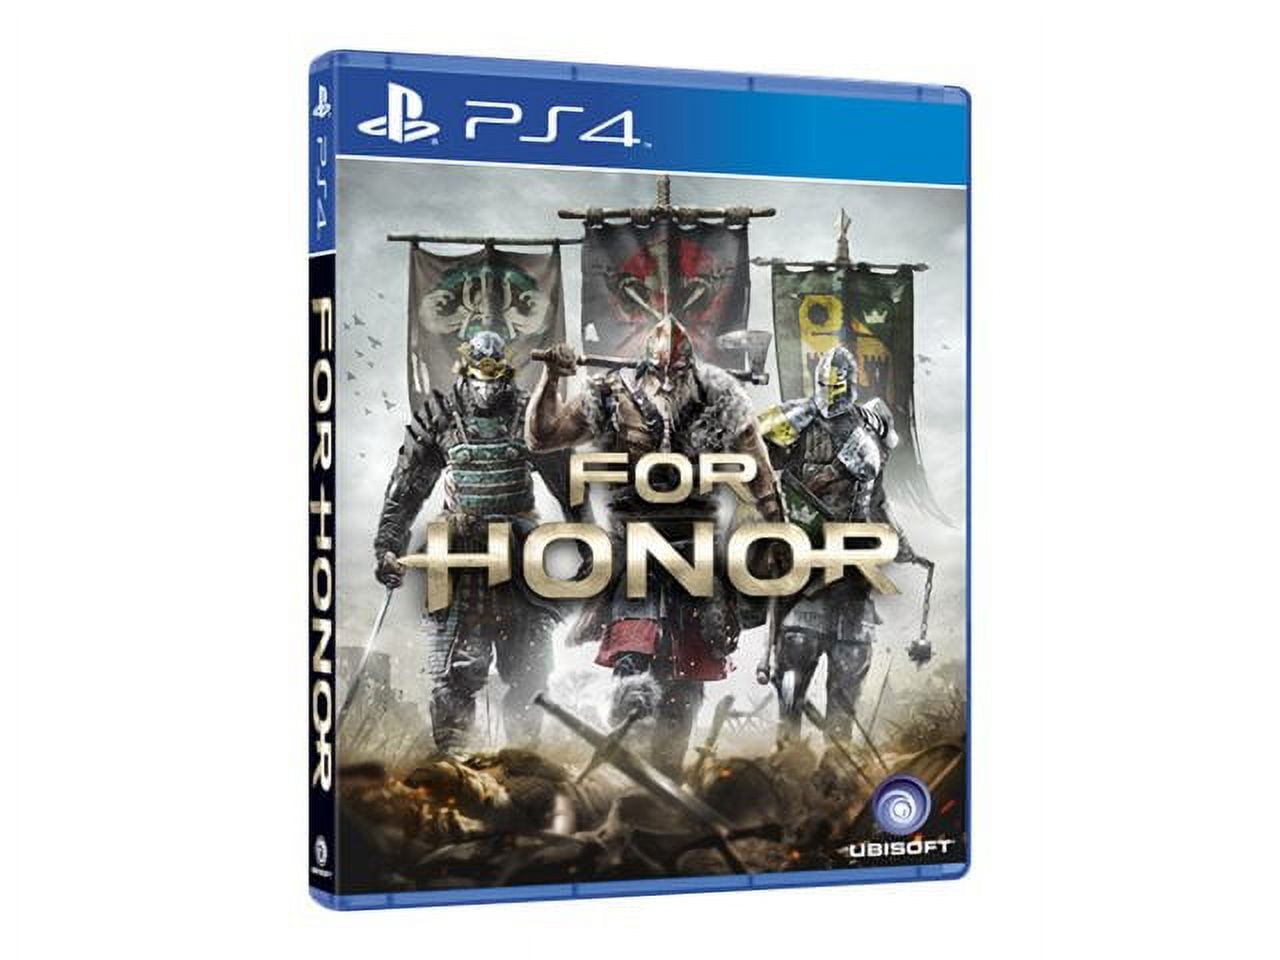 For Honor para PS4 - ShopB - 14 anos!